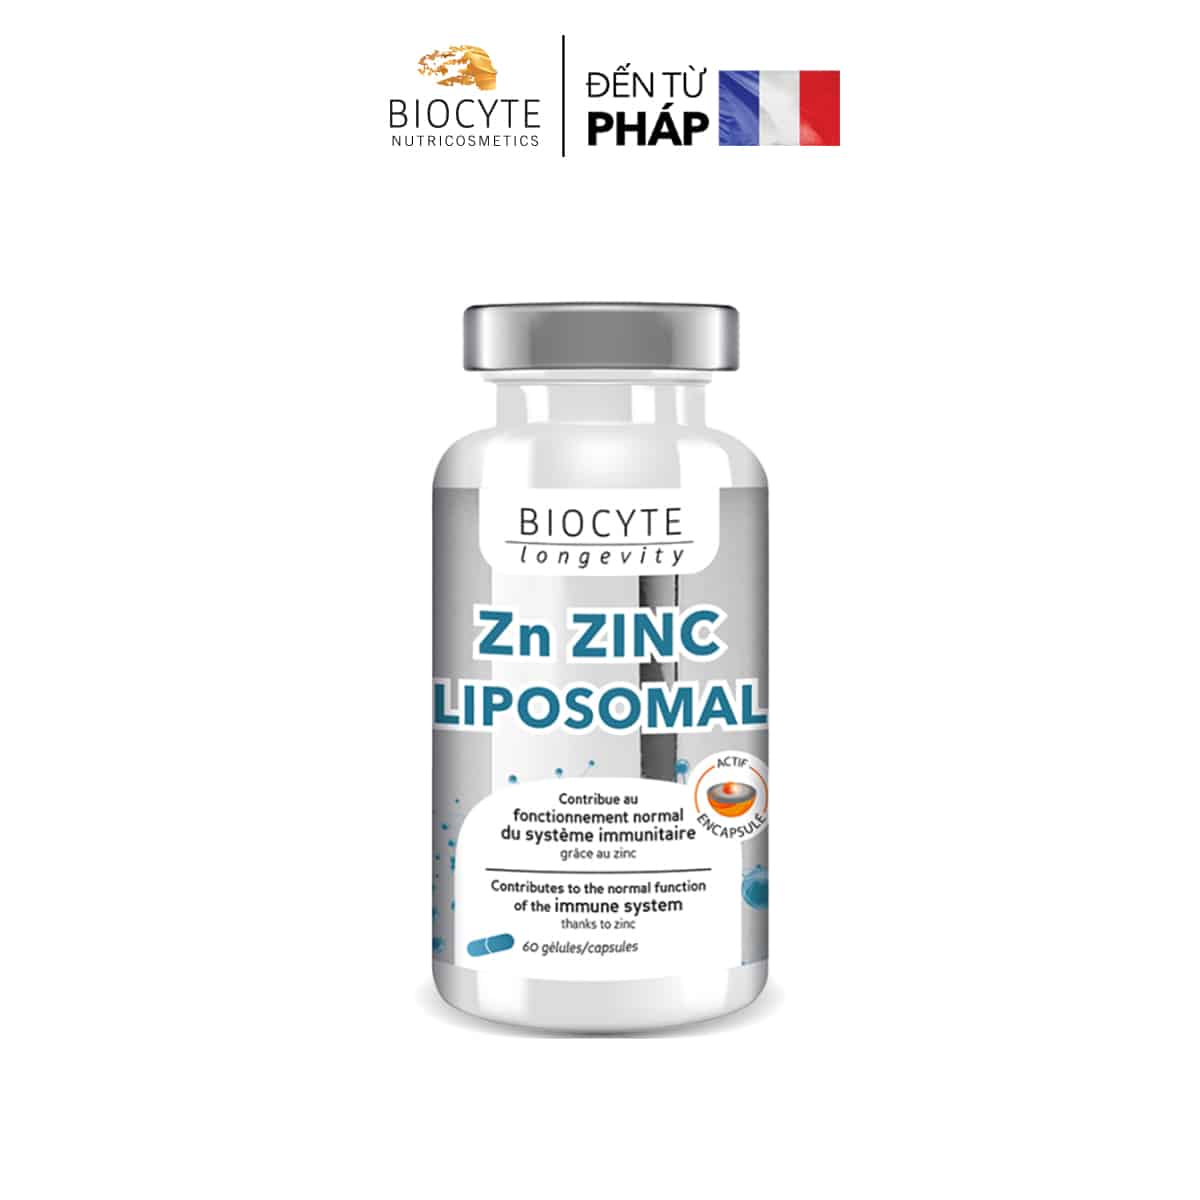 B18 – Zn Zinc Liposomal – Viên uống bổ sung Kẽm Liposomal